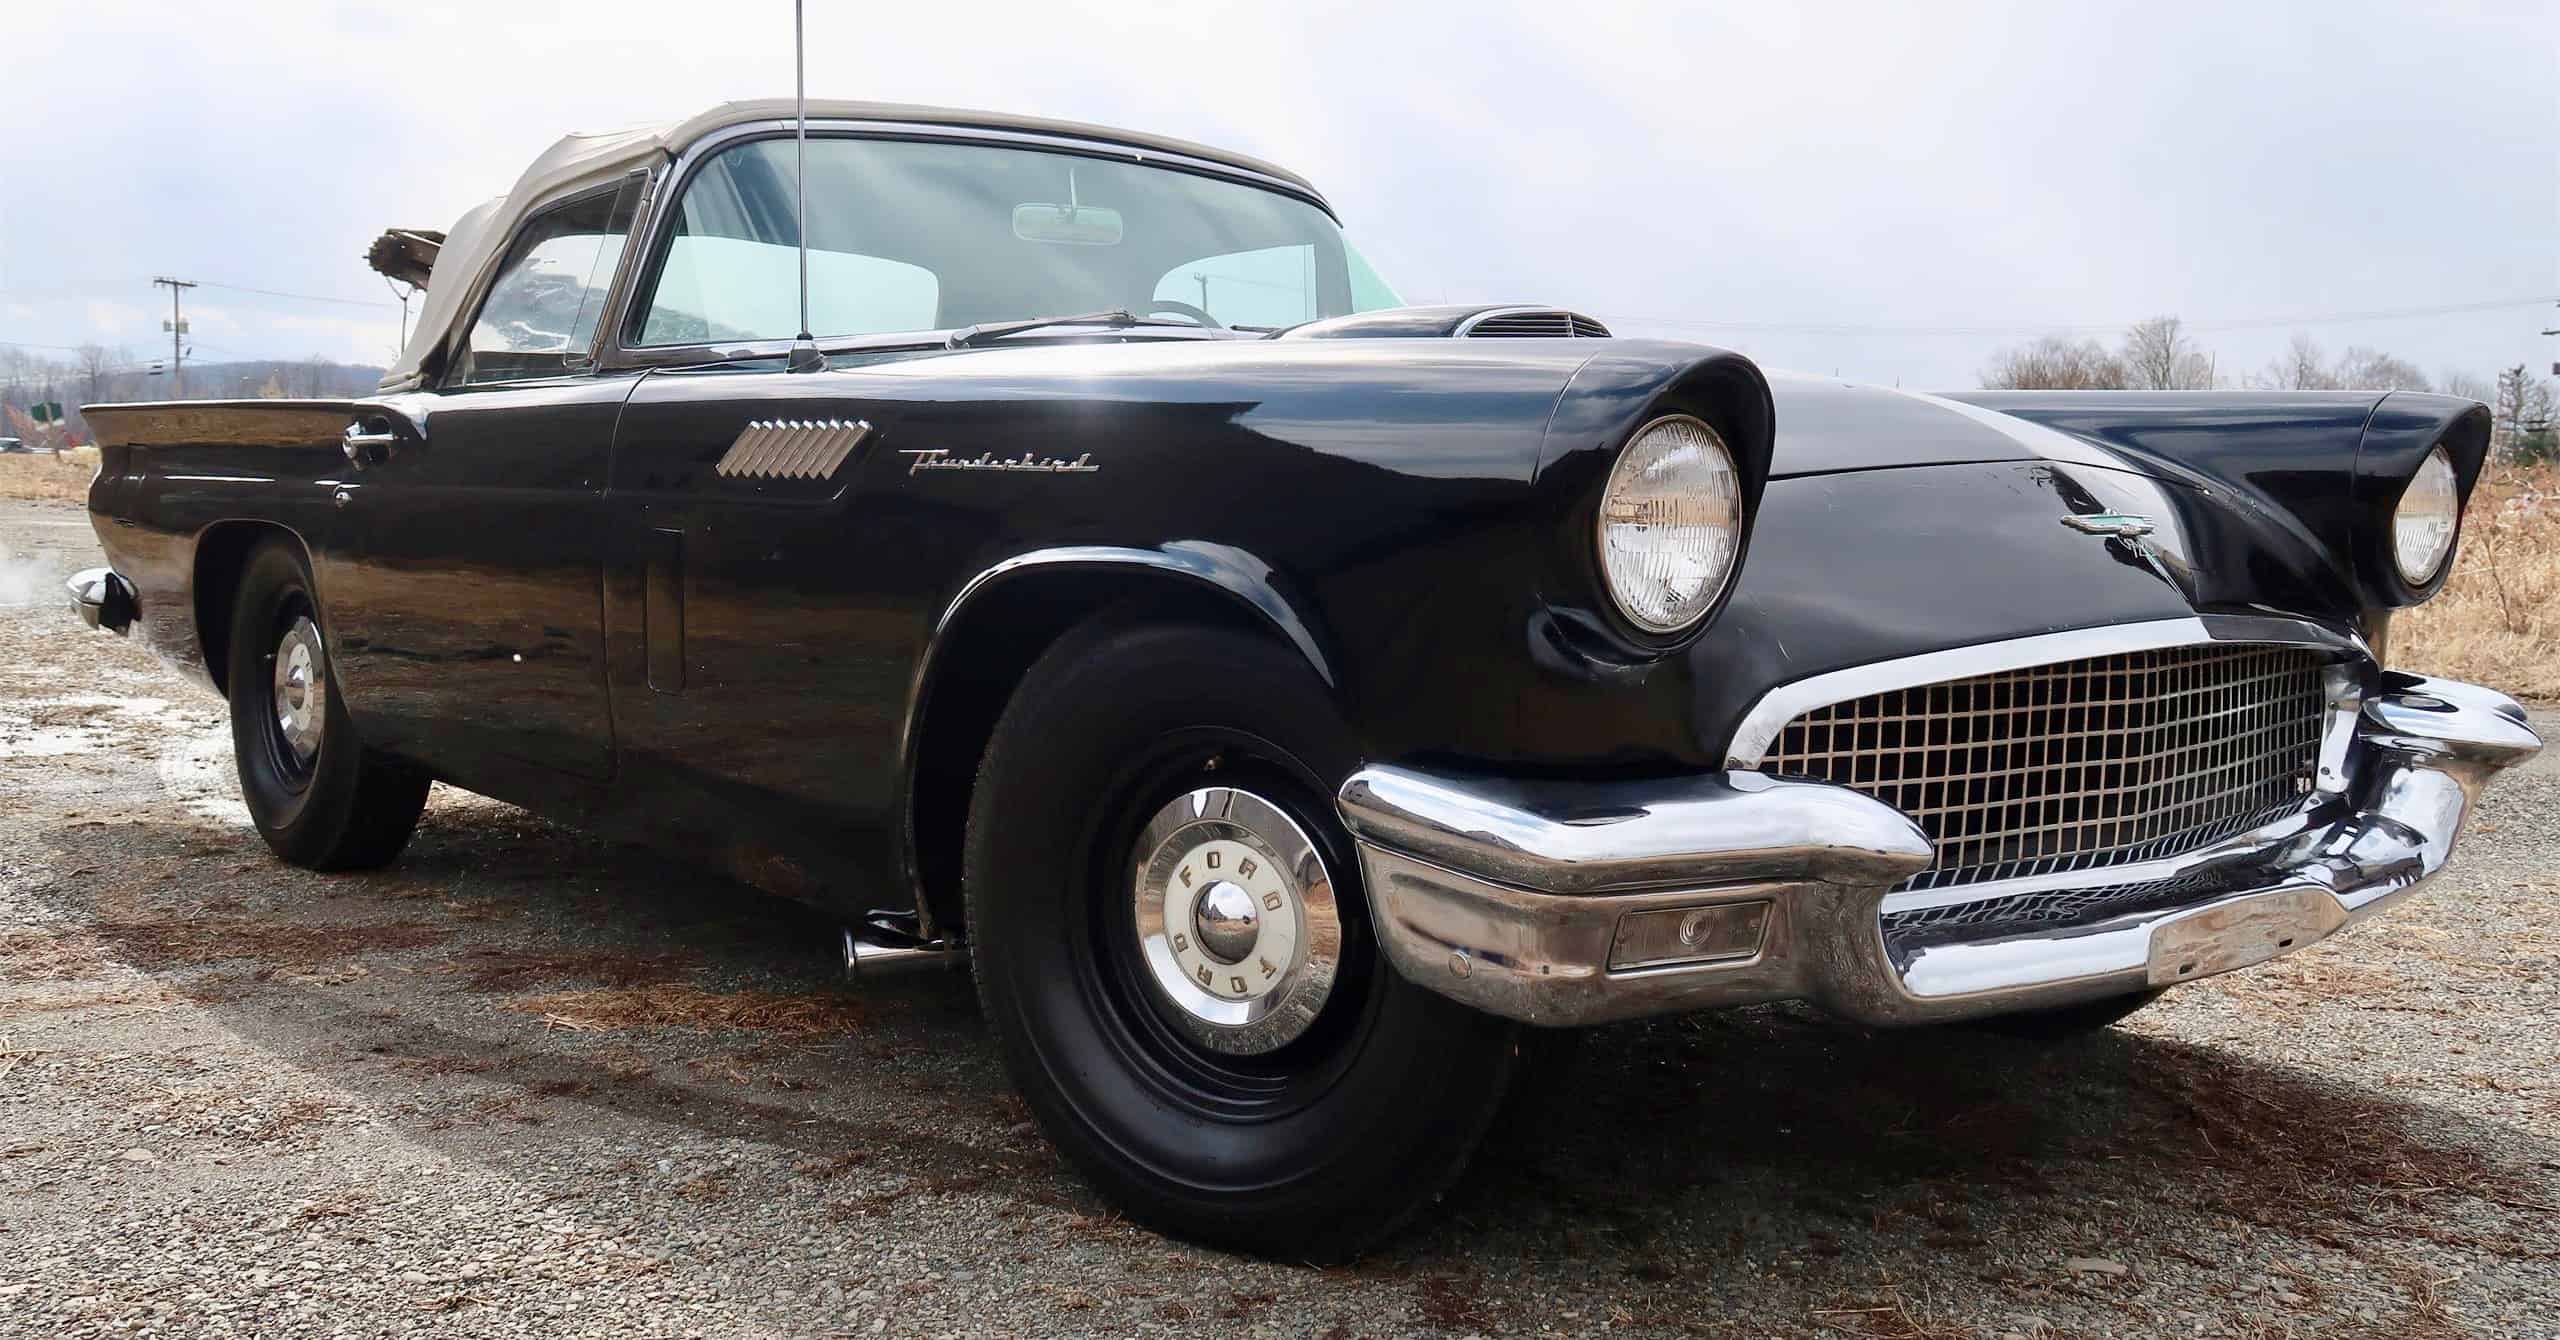 1957 Ford Thunderbird, Black ‘Birds of a feather?, ClassicCars.com Journal